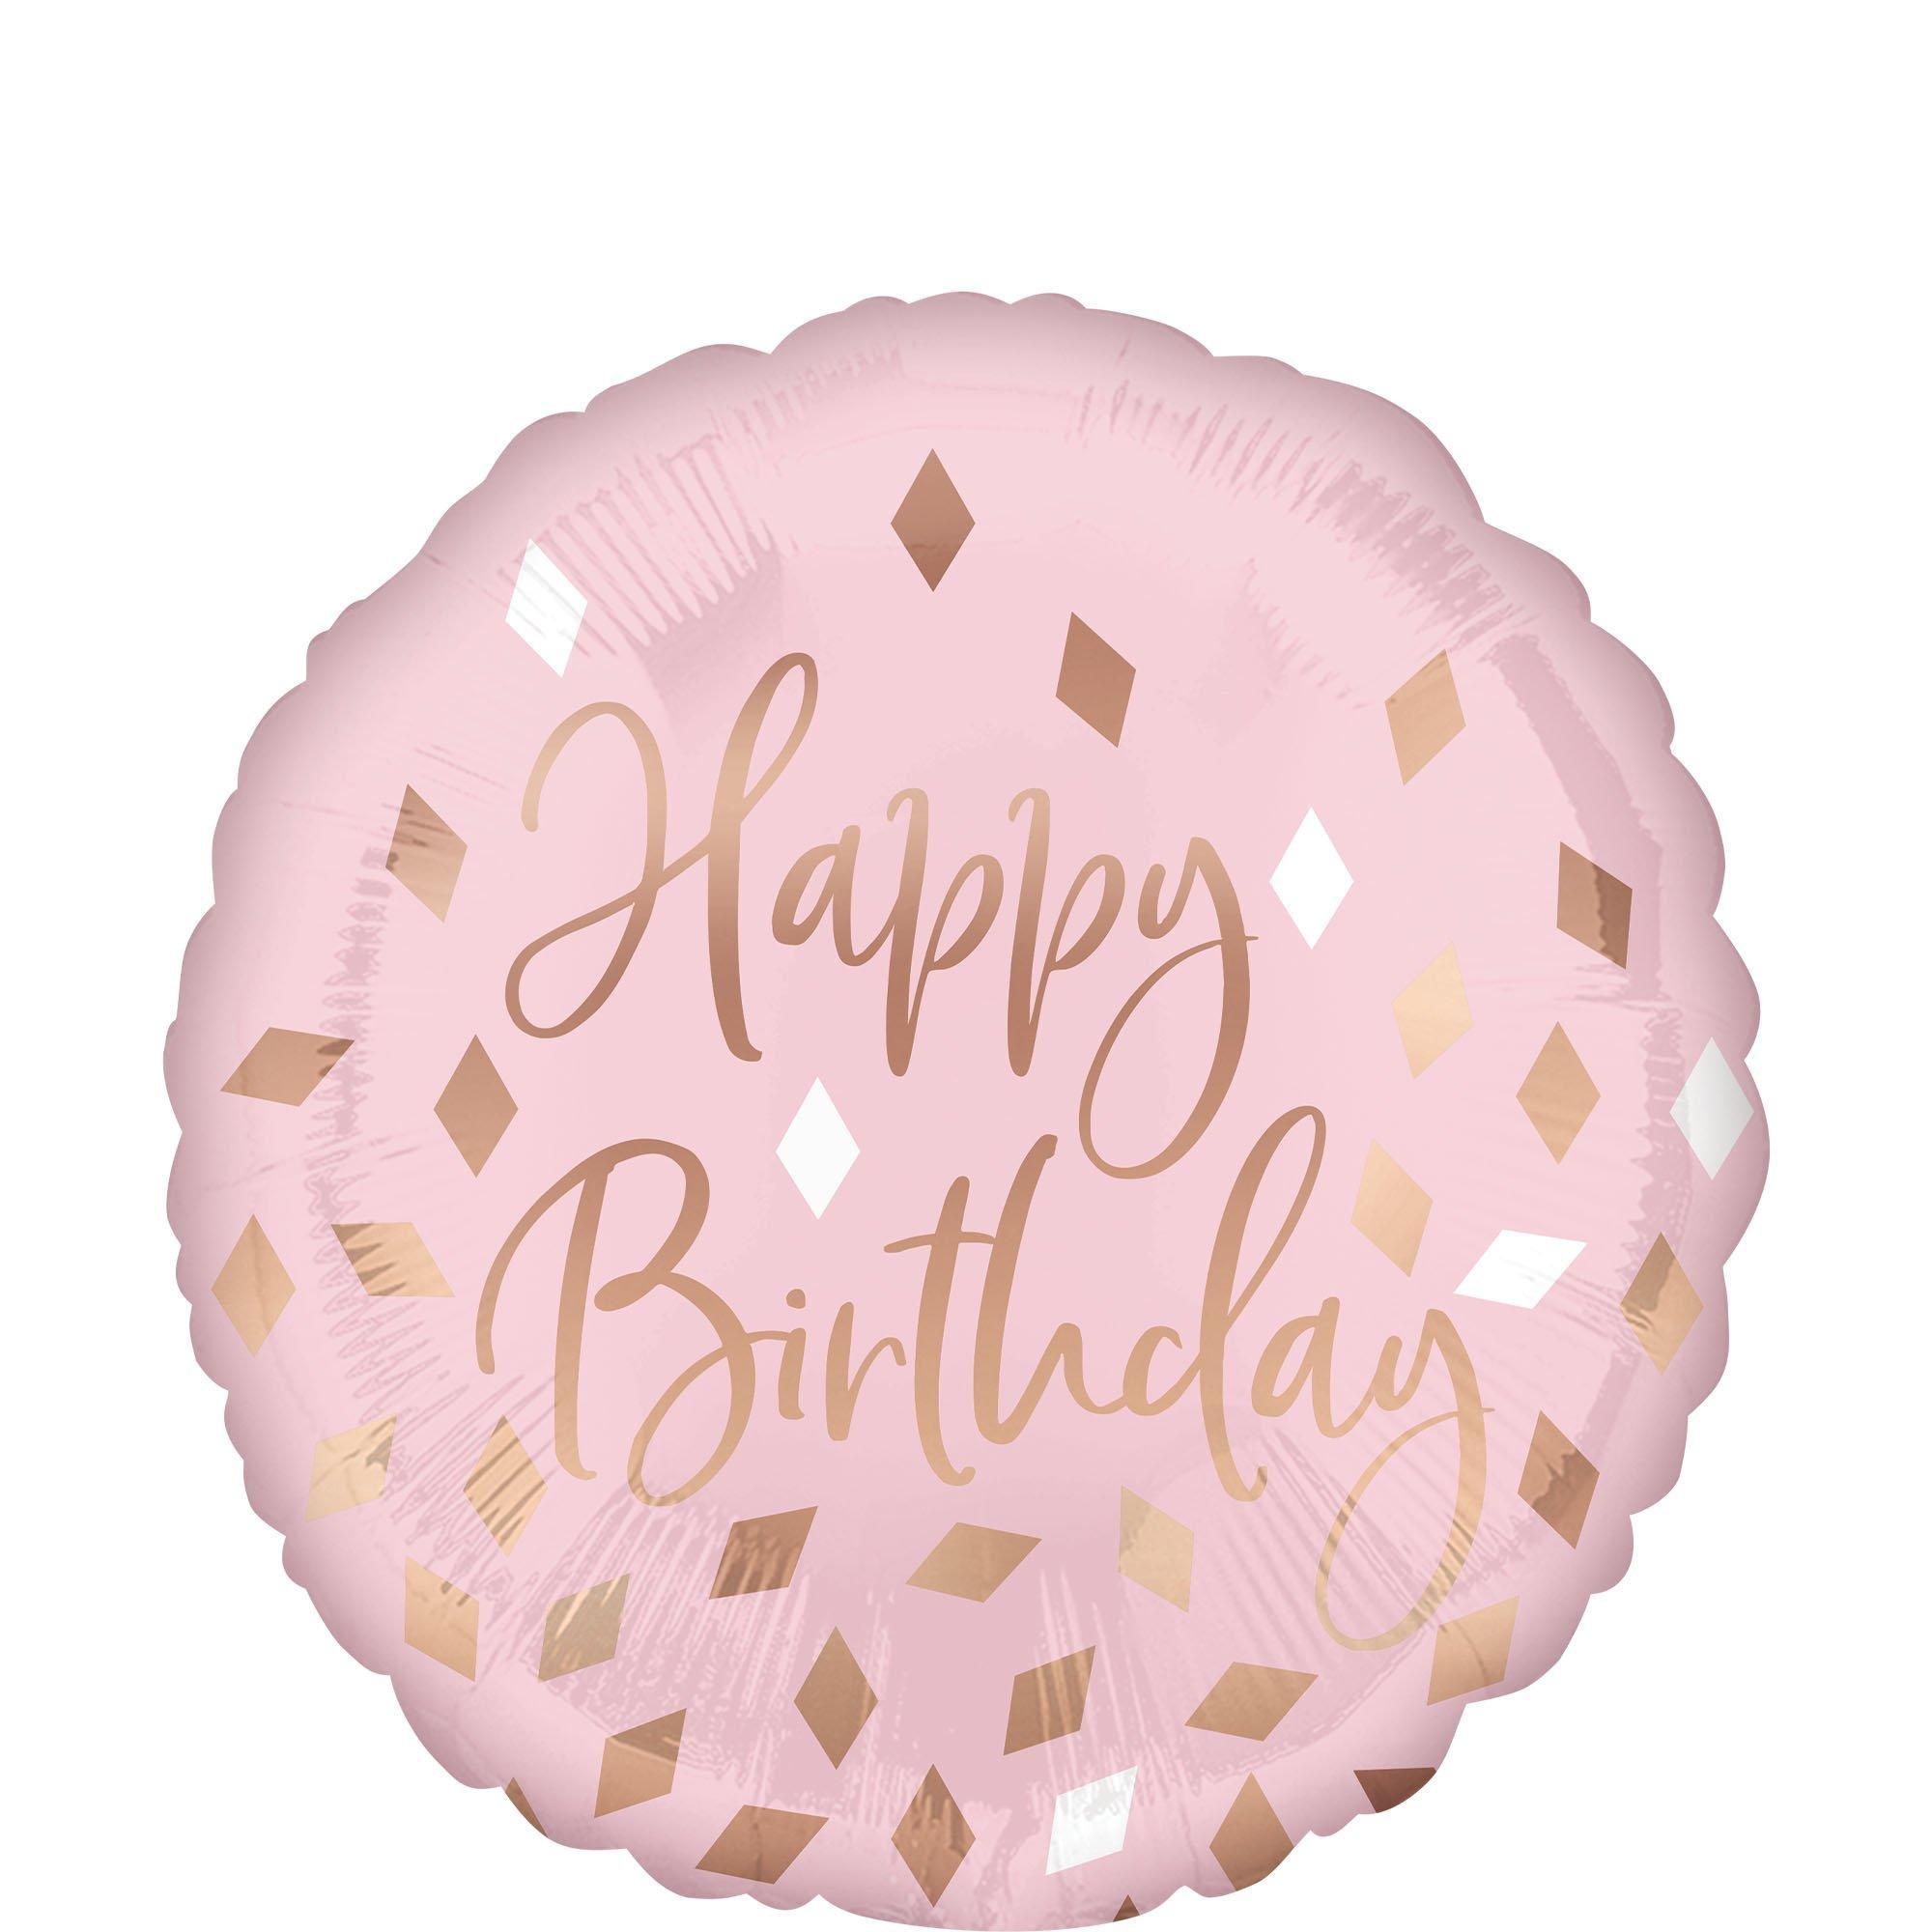 Premium Blush Birthday Foil Balloon Bouquet with Balloon Weight, 11pc